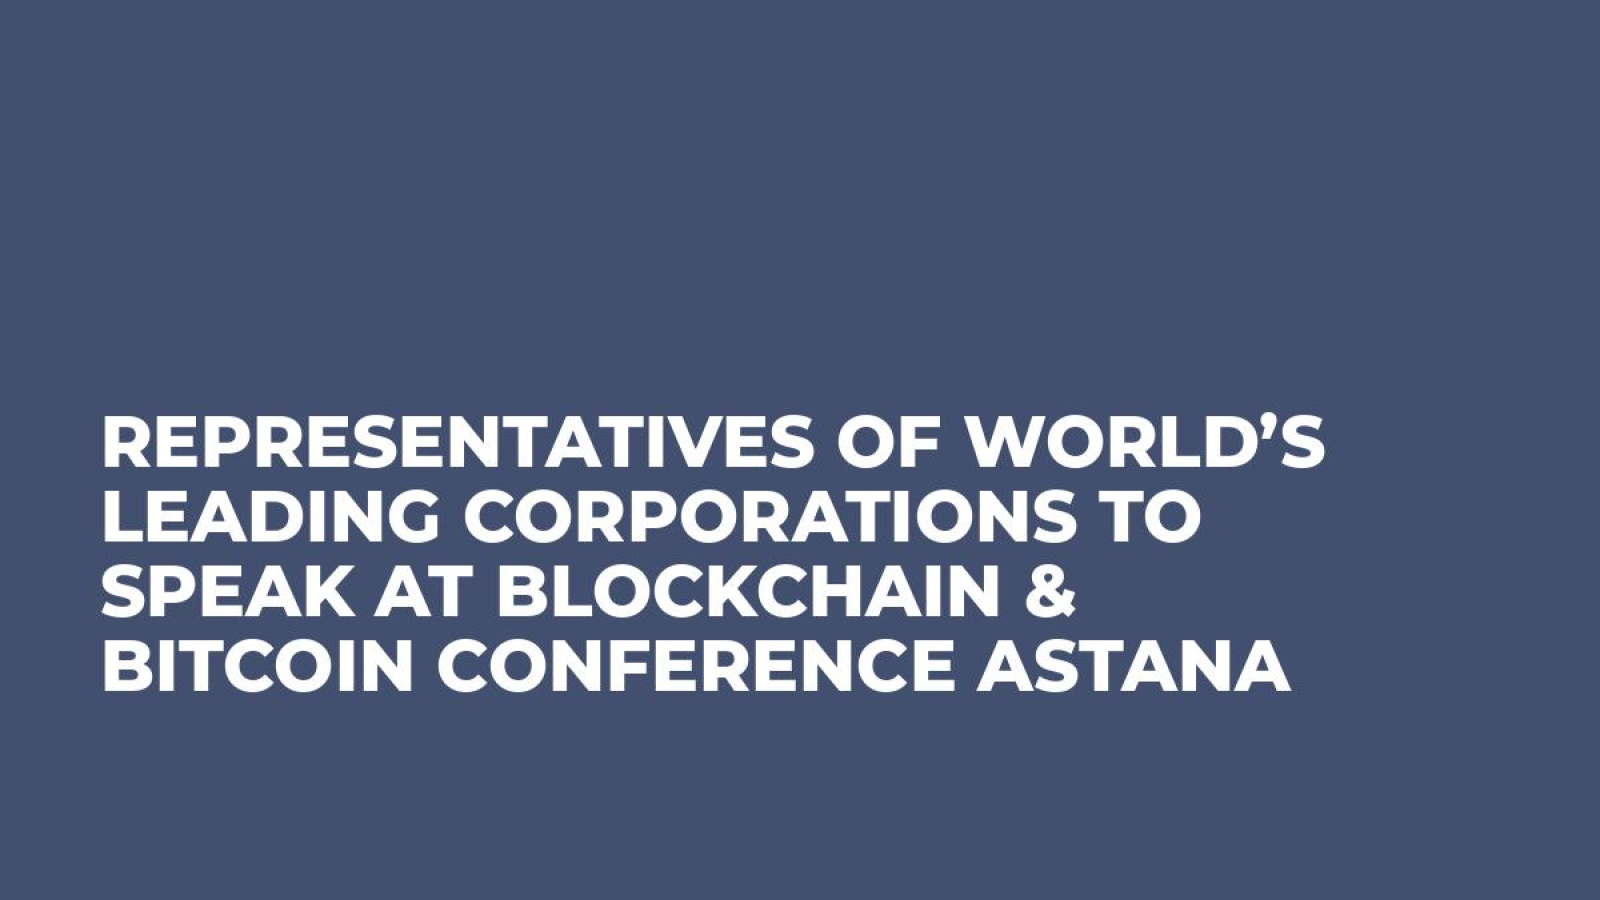 Representatives of world’s leading corporations to speak at Blockchain & Bitcoin Conference Astana